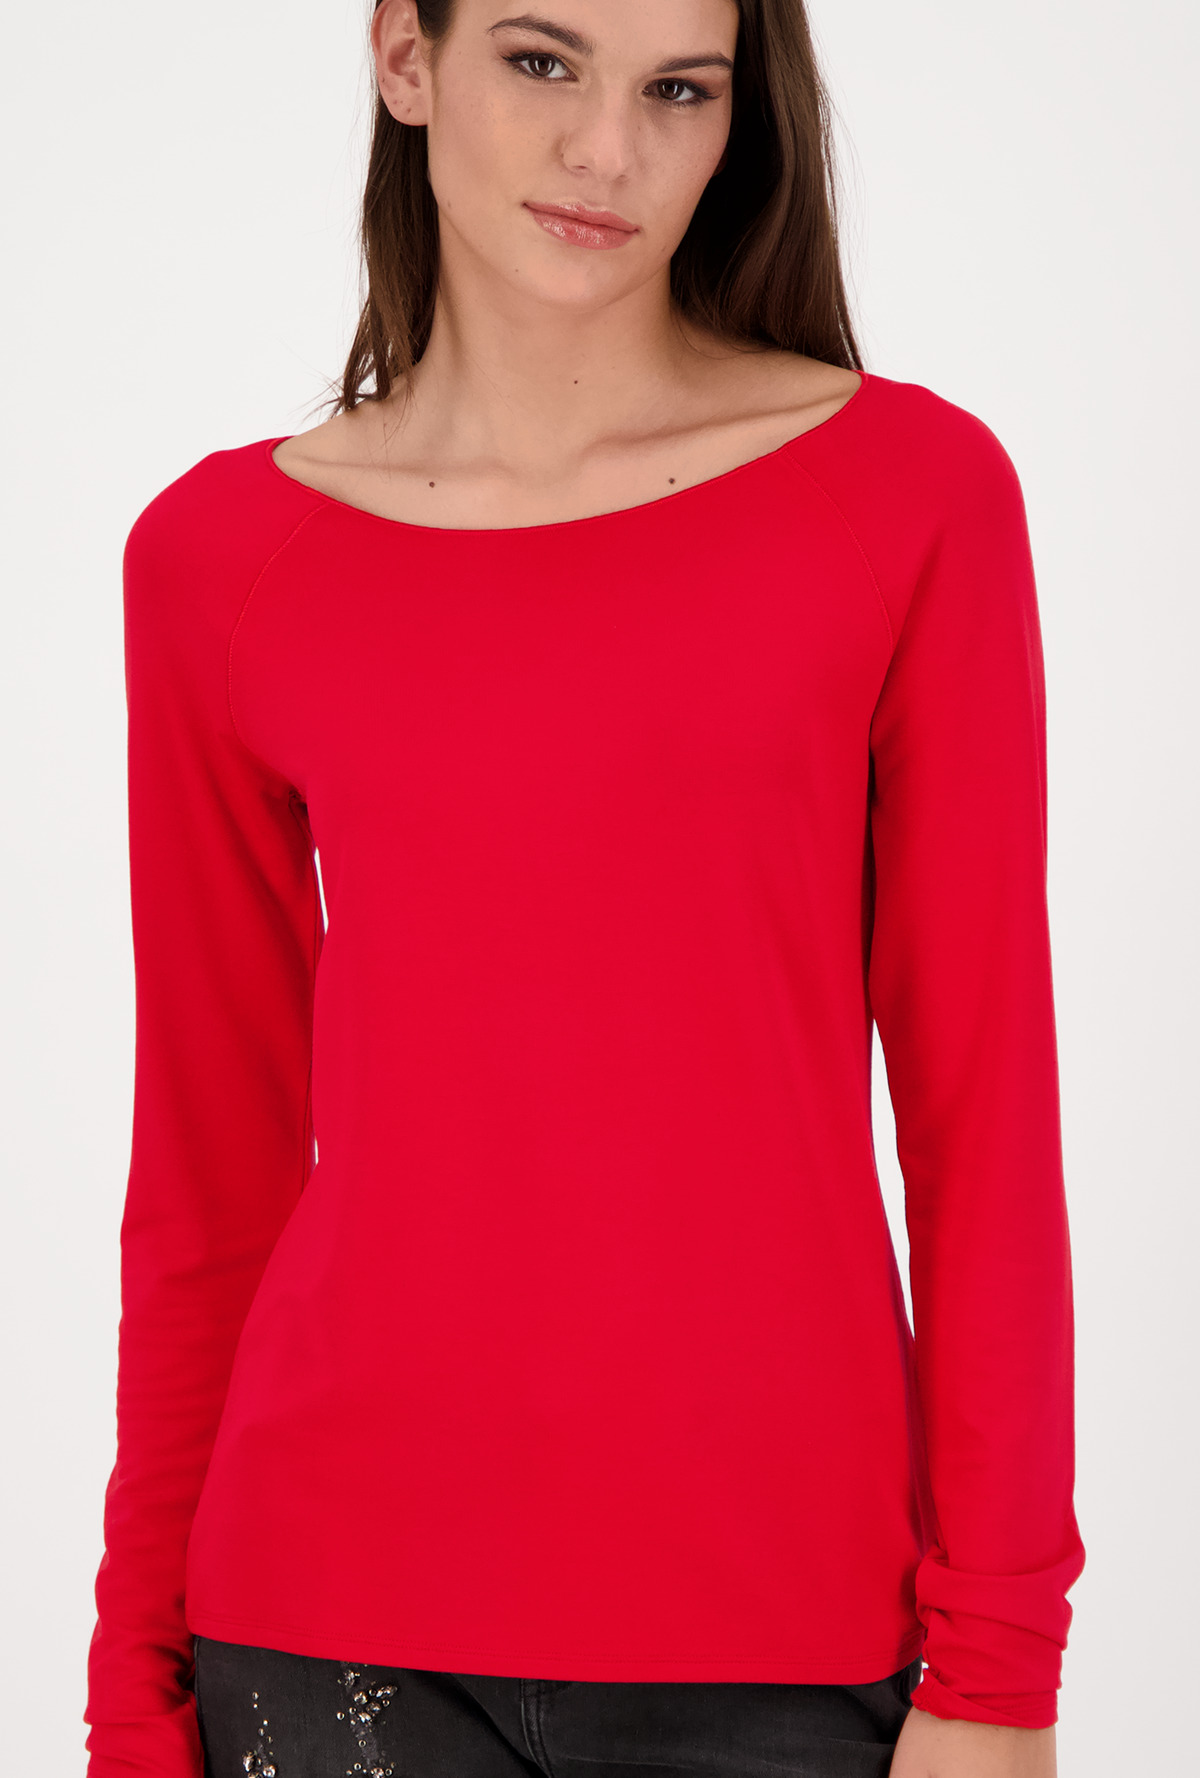 Monari Unifarbenes Langarm Jersey Shirt mit Rundhals mode weber 